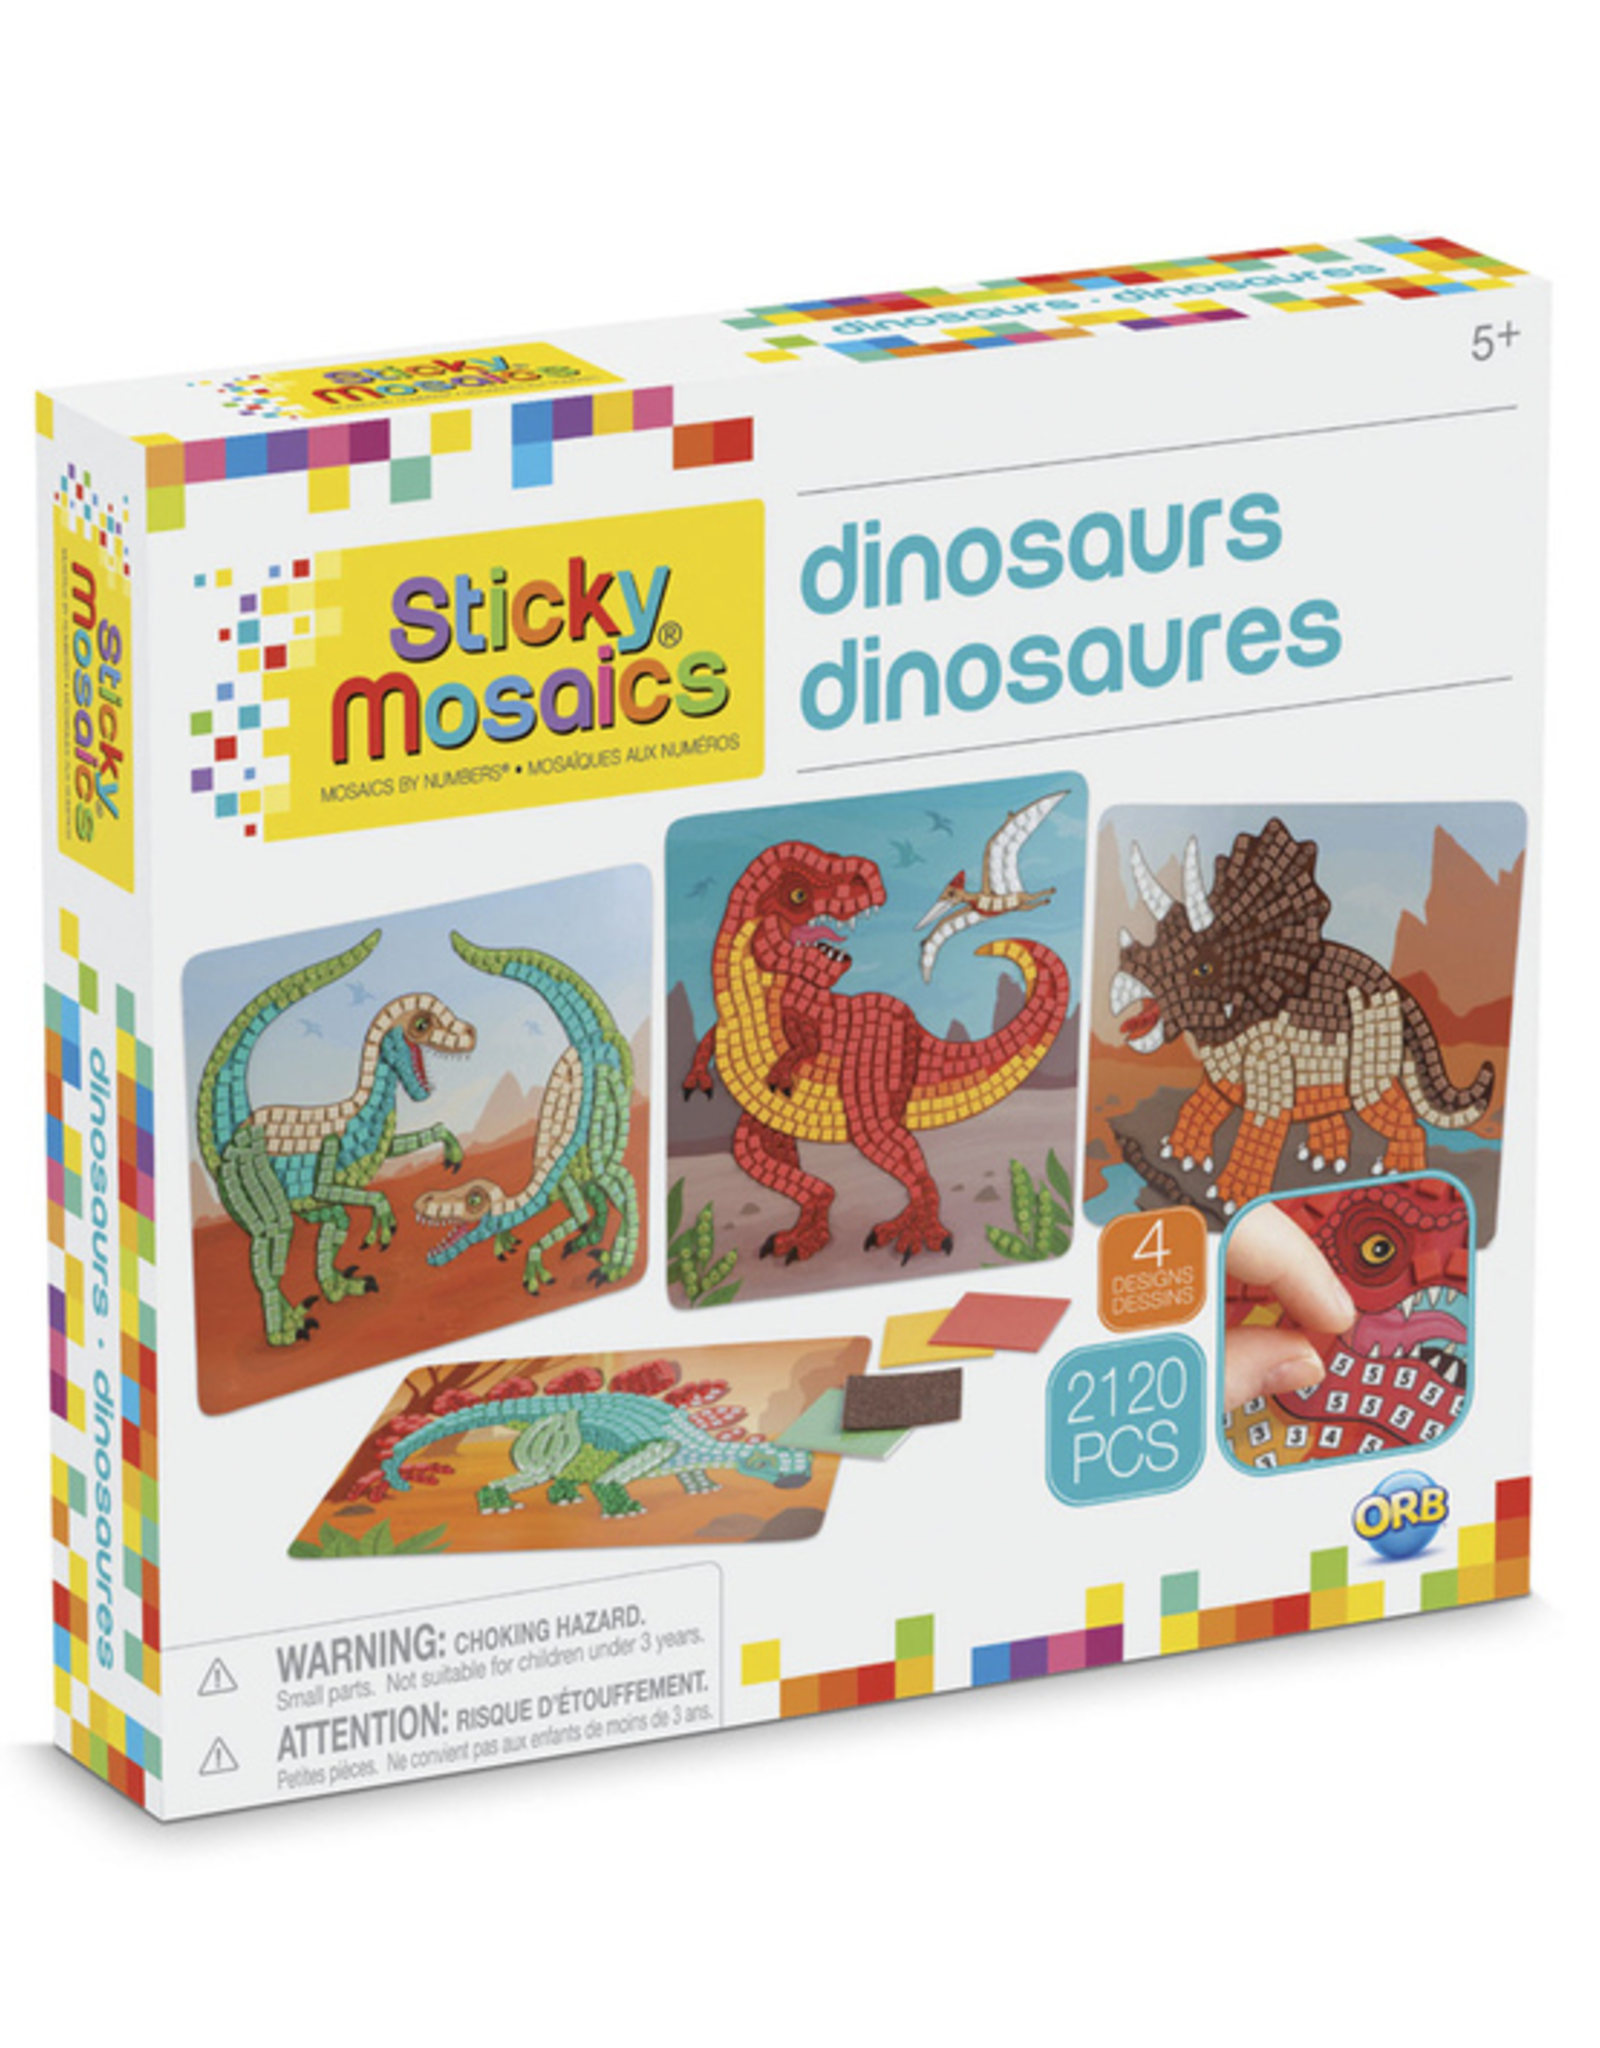 ORB Orb - Sticky Mosaics Dinosaurs